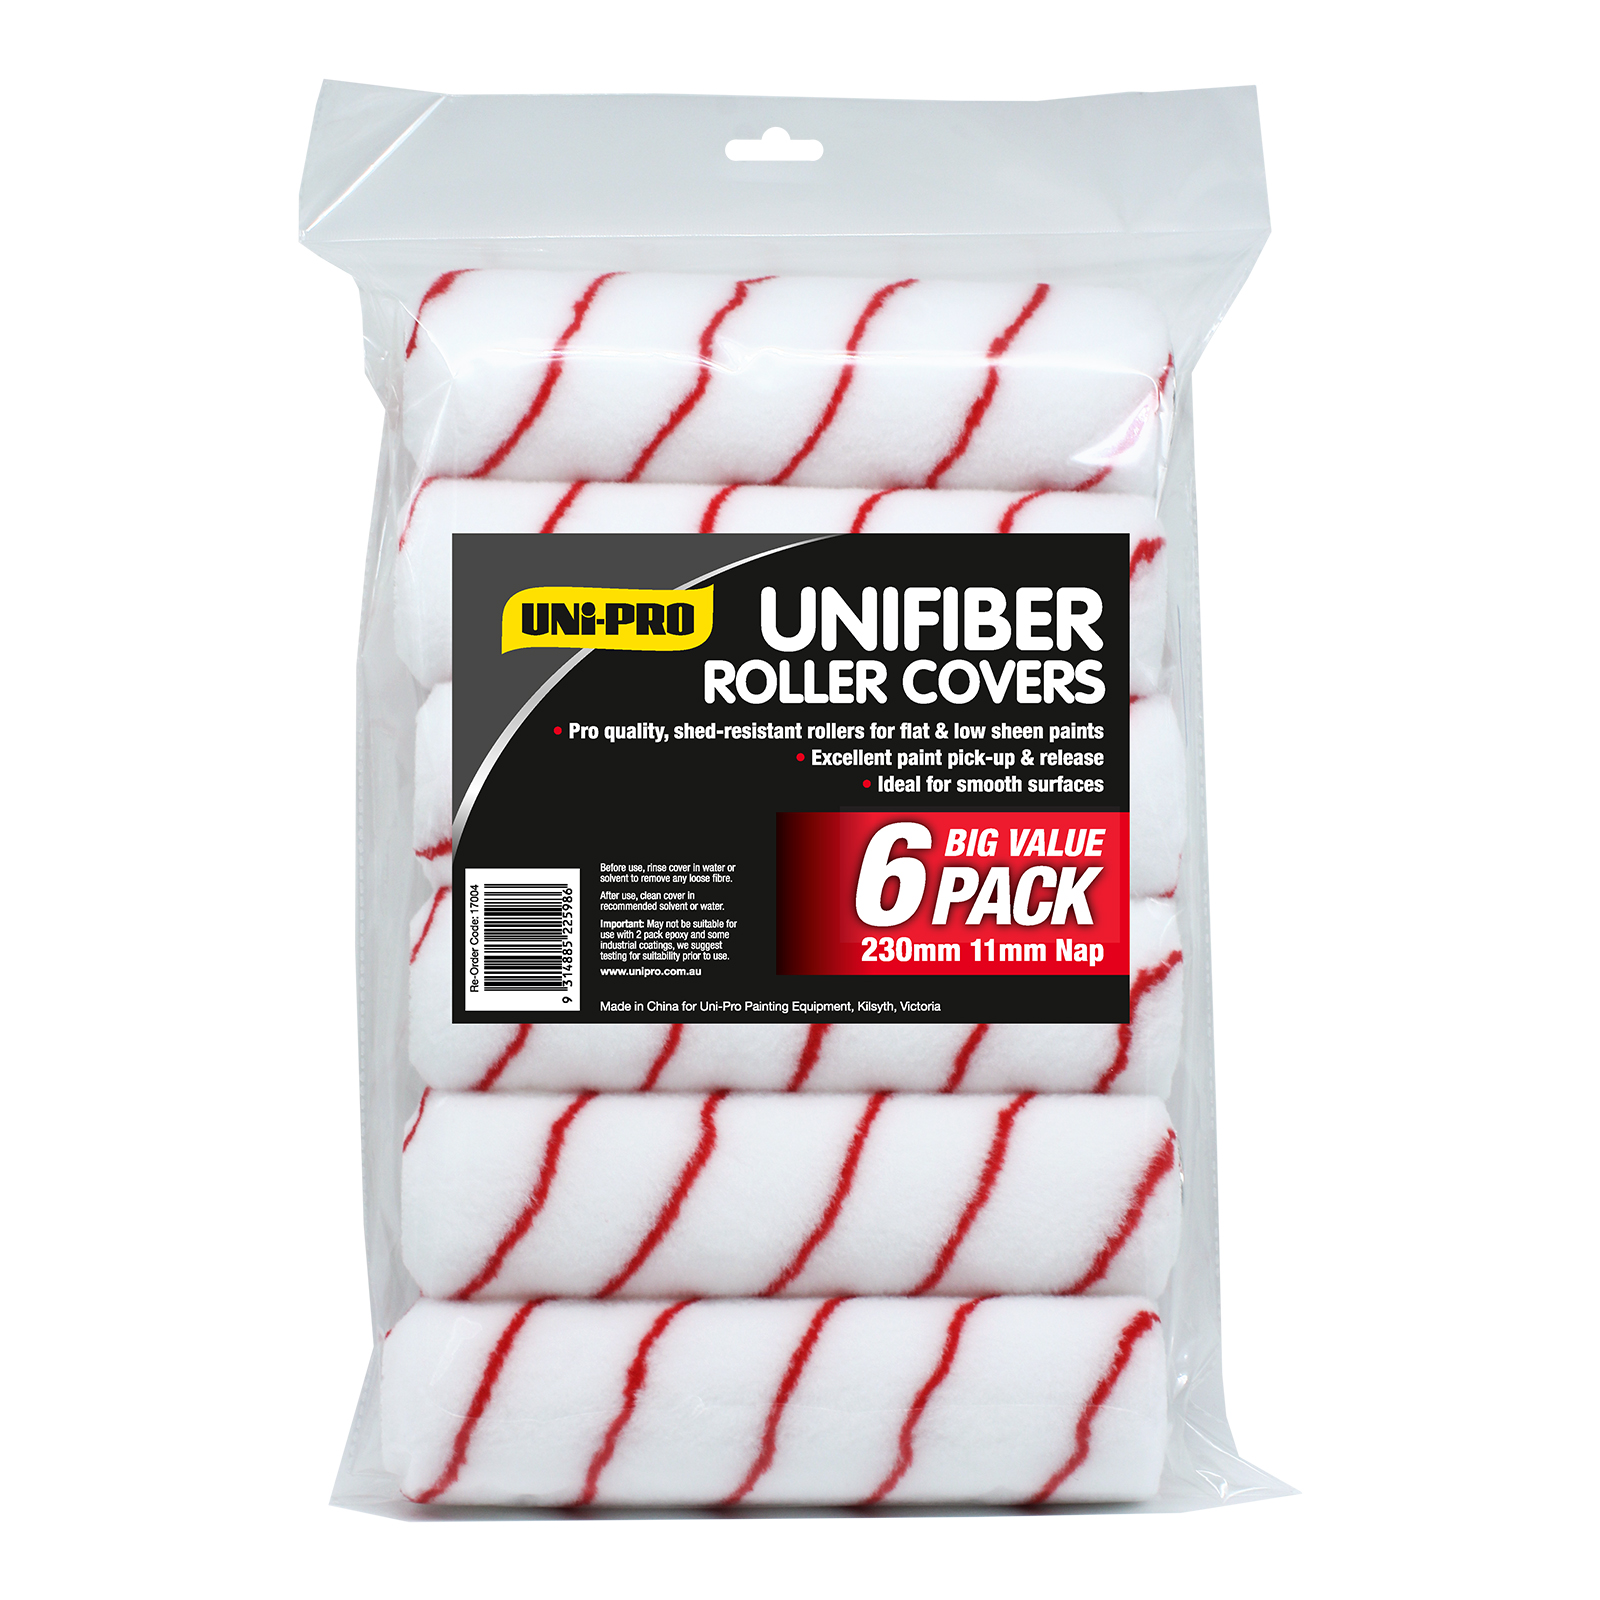 UNi-PRO Unifiber Roller Covers 6 Pack - 11mm nap